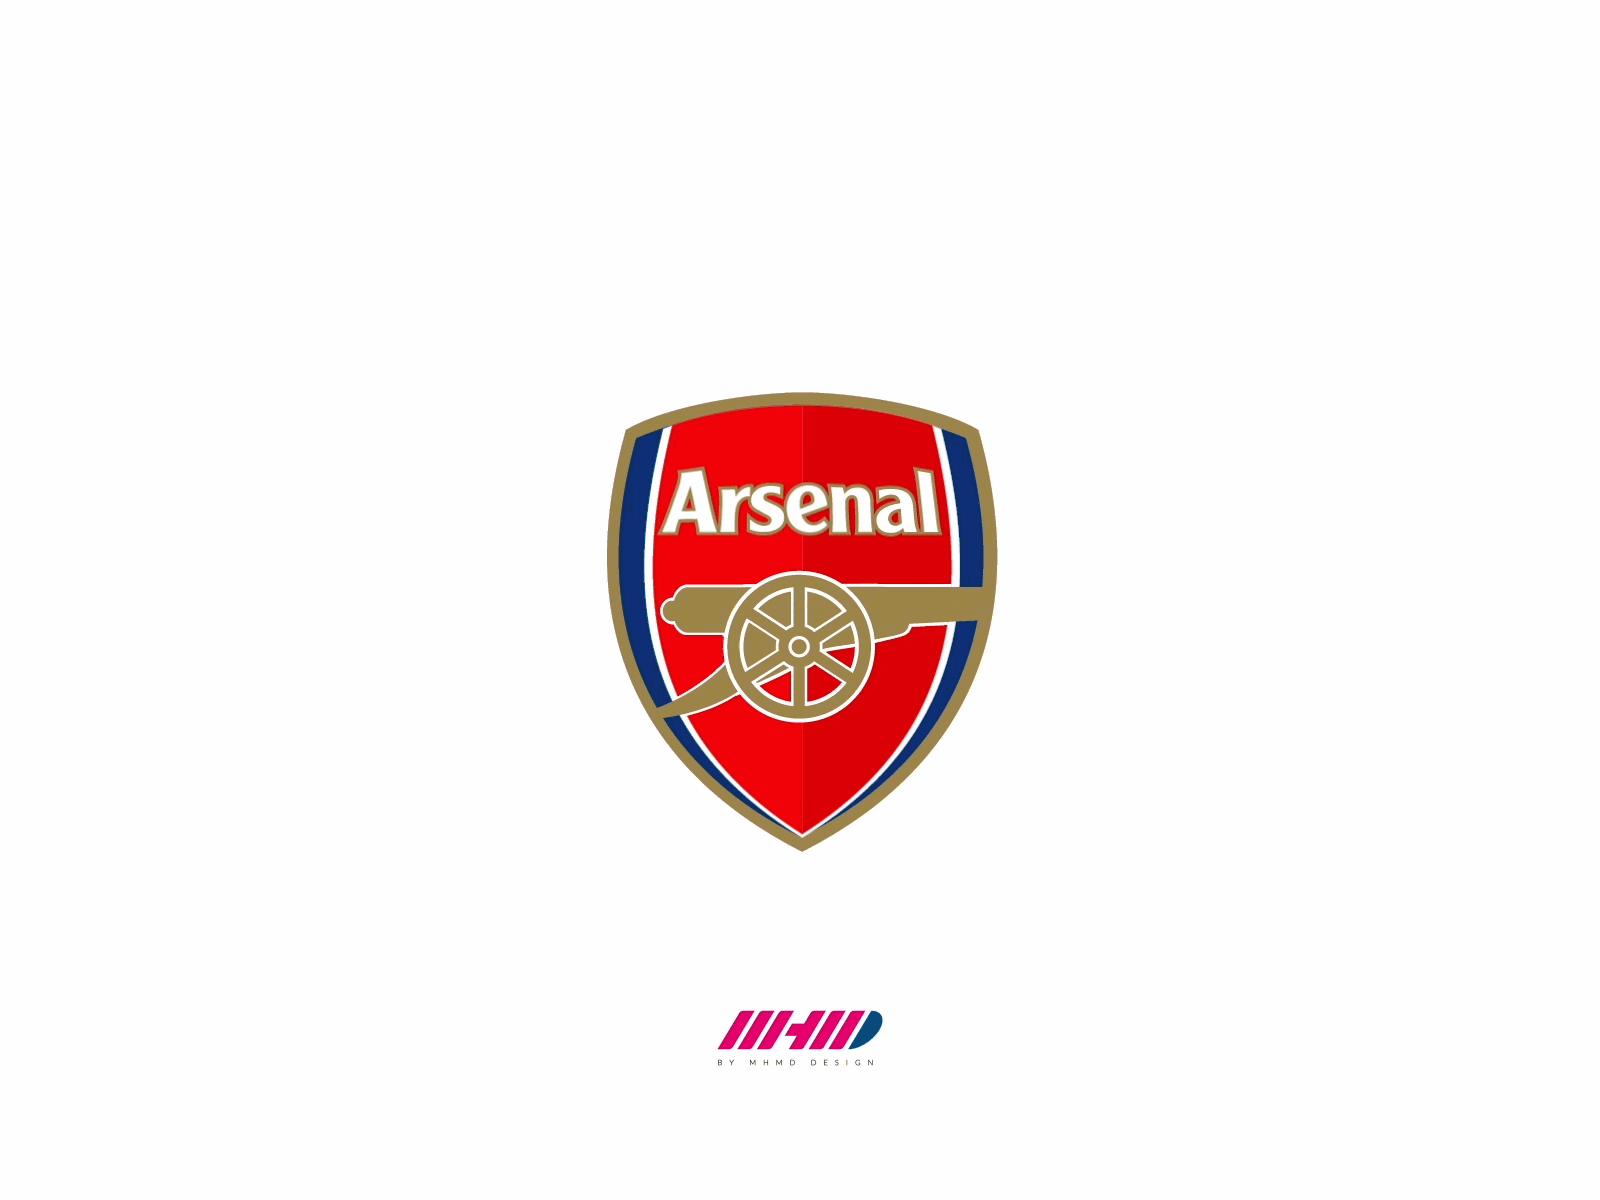 Arsenal - Arsenal fond d'écran (3382468) - fanpop